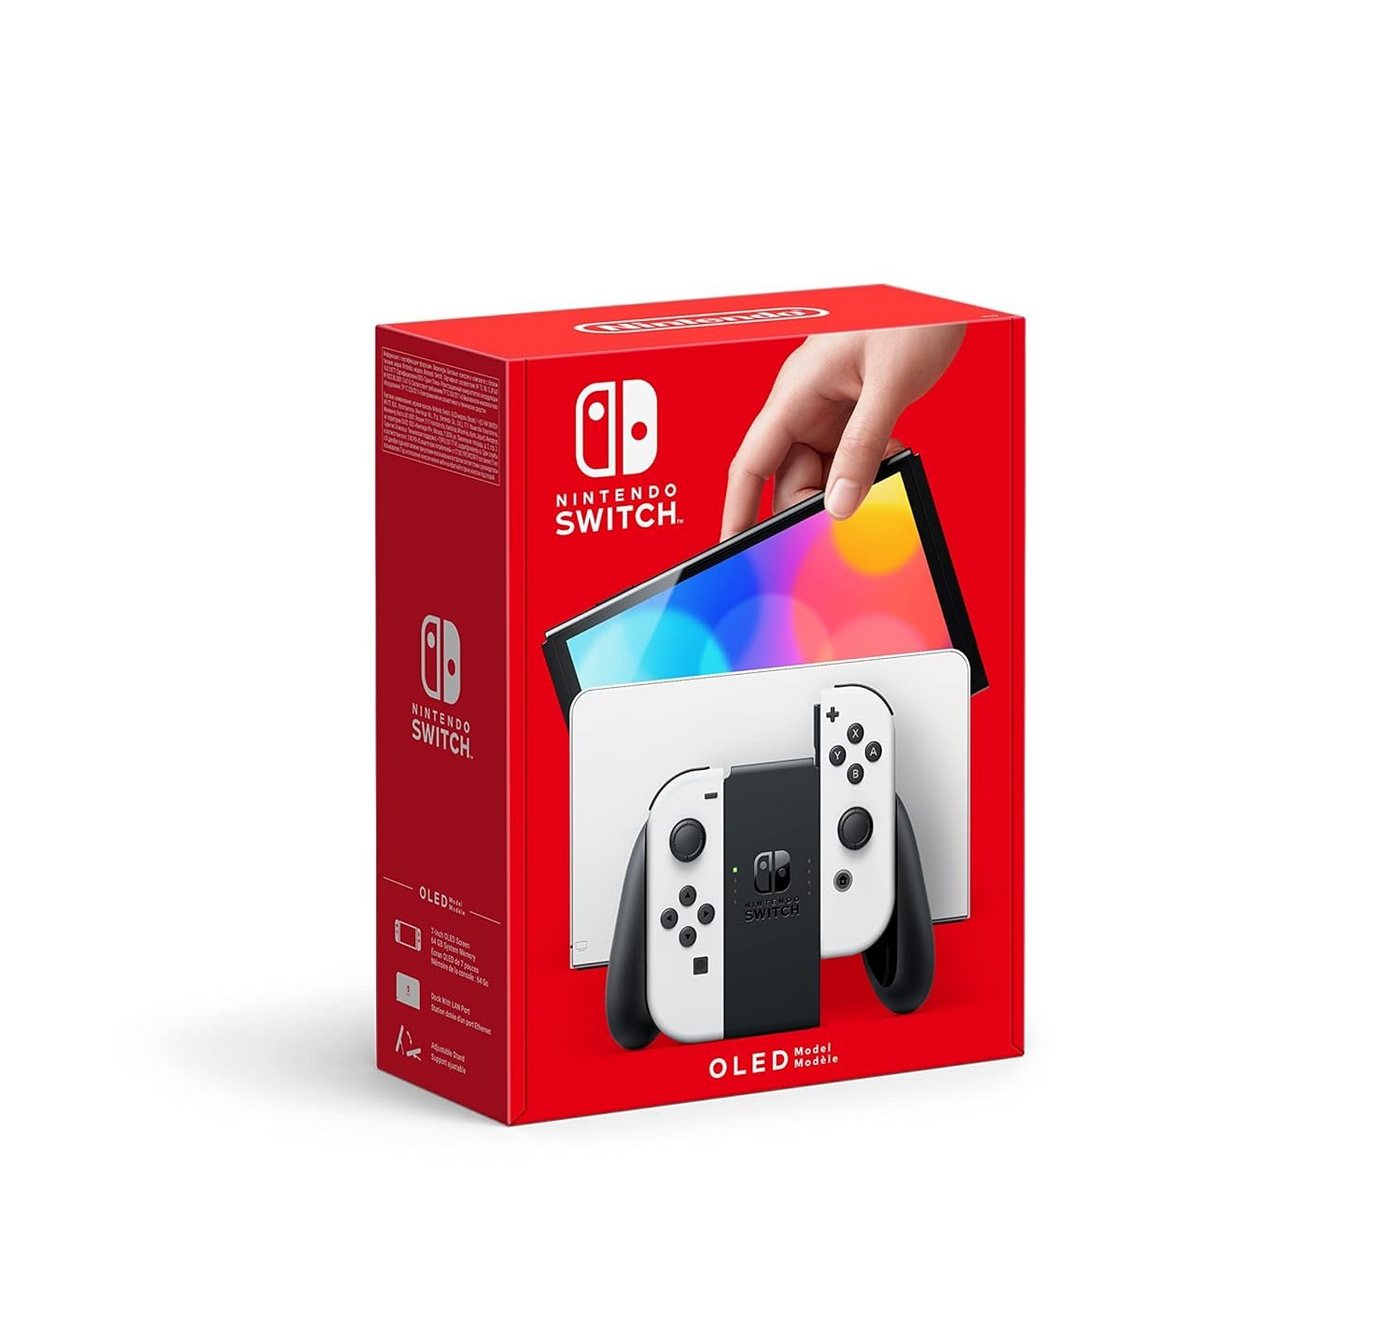 Nintendo Switch OLED Modell Konsole weiß - Handheld Spielekonsole (inkl. Joy-Con) von Nintendo Switch